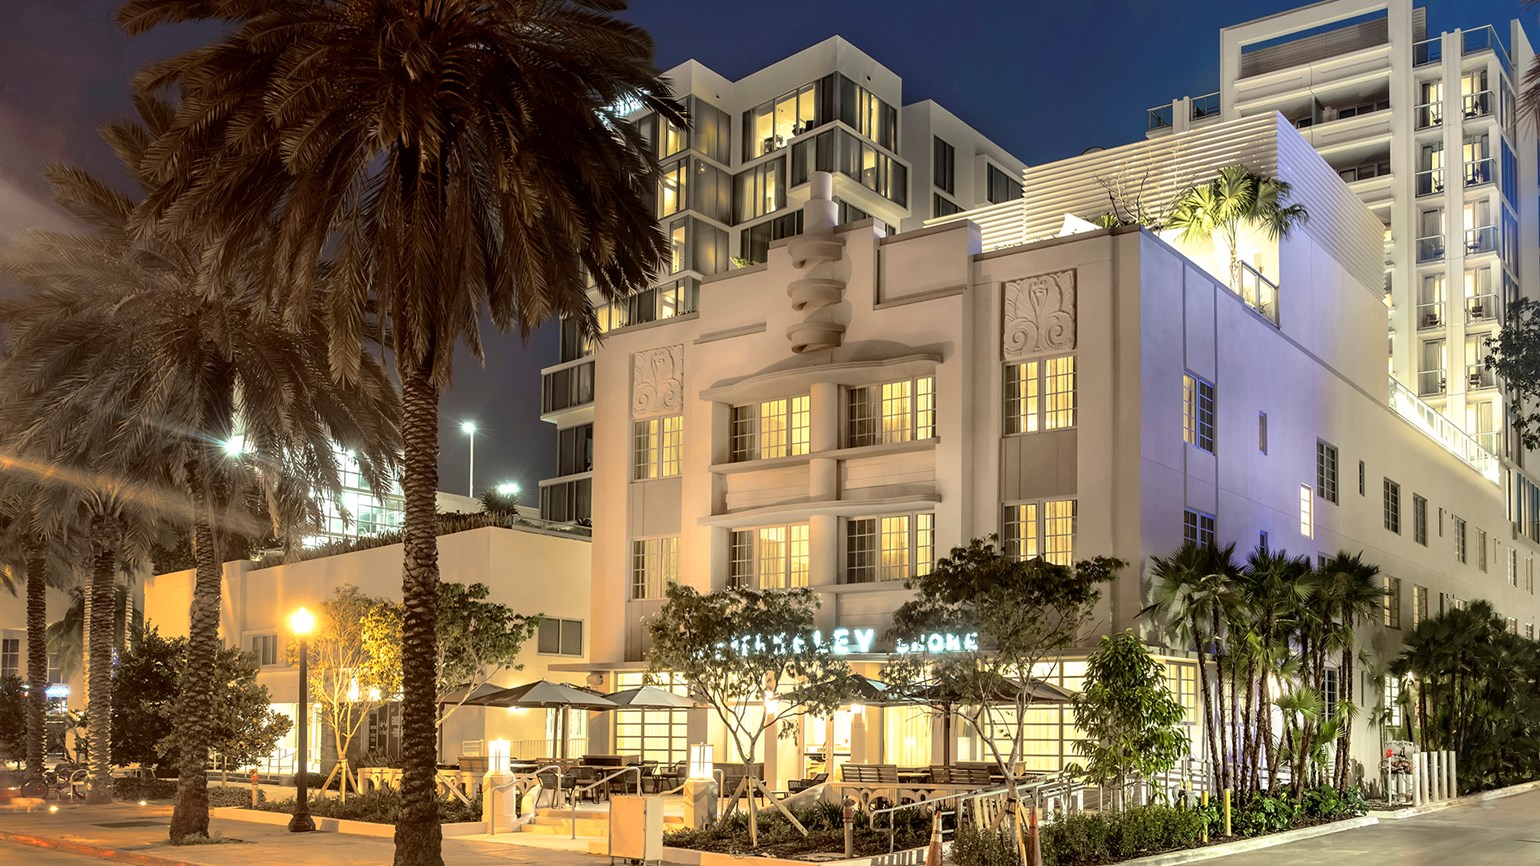 The Berkeley Hotel in Miami Beach Reopens